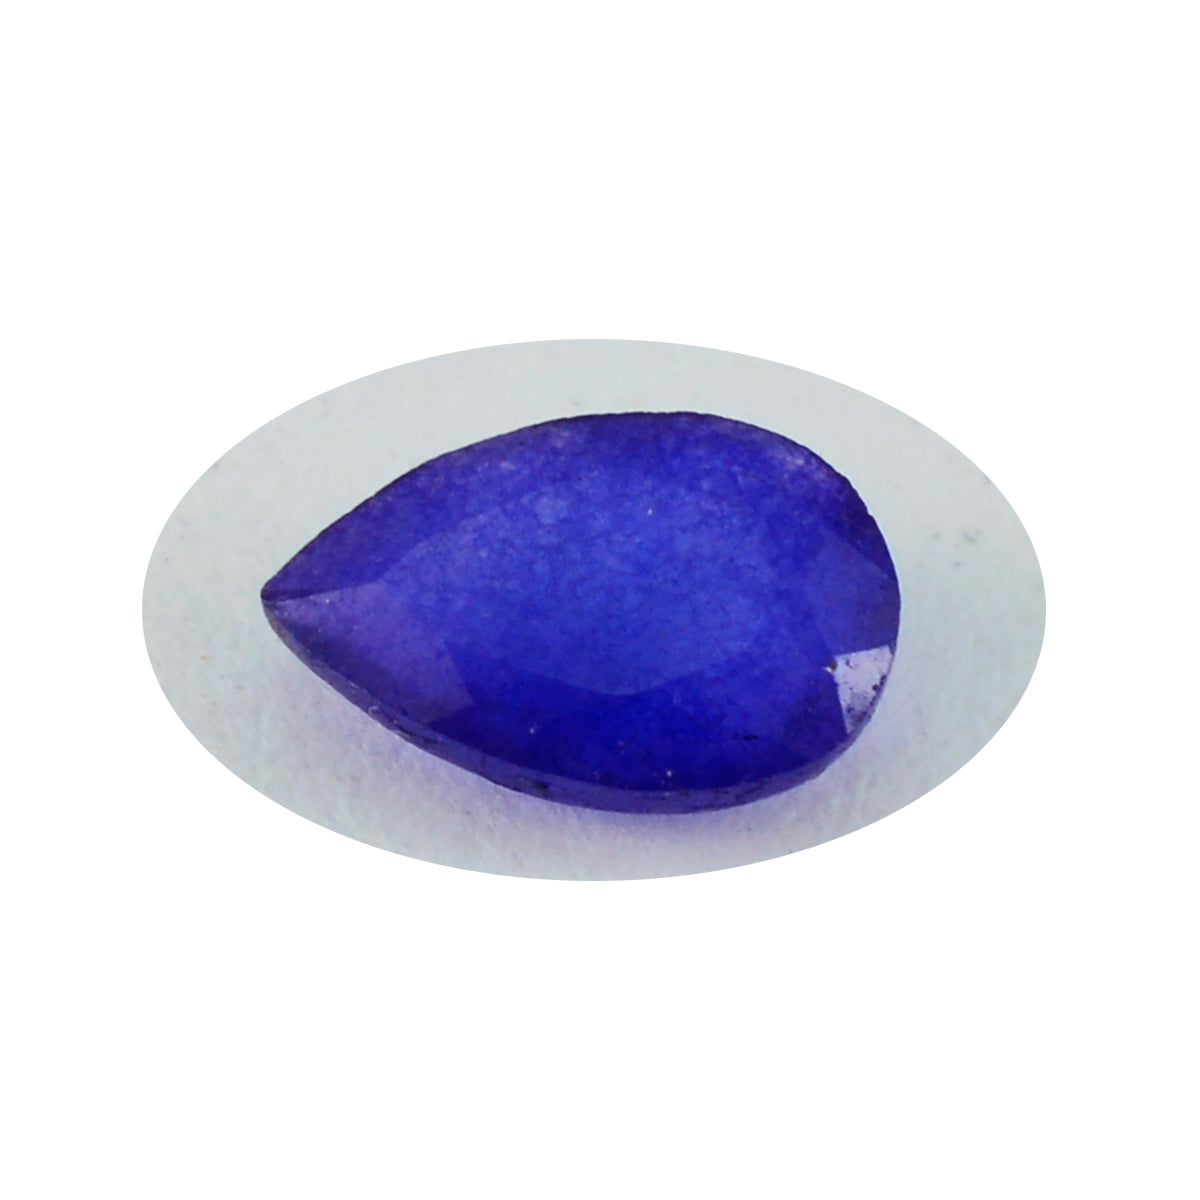 Riyogems 1PC Genuine Blue Jasper Faceted 12x16 mm Pear Shape wonderful Quality Loose Stone